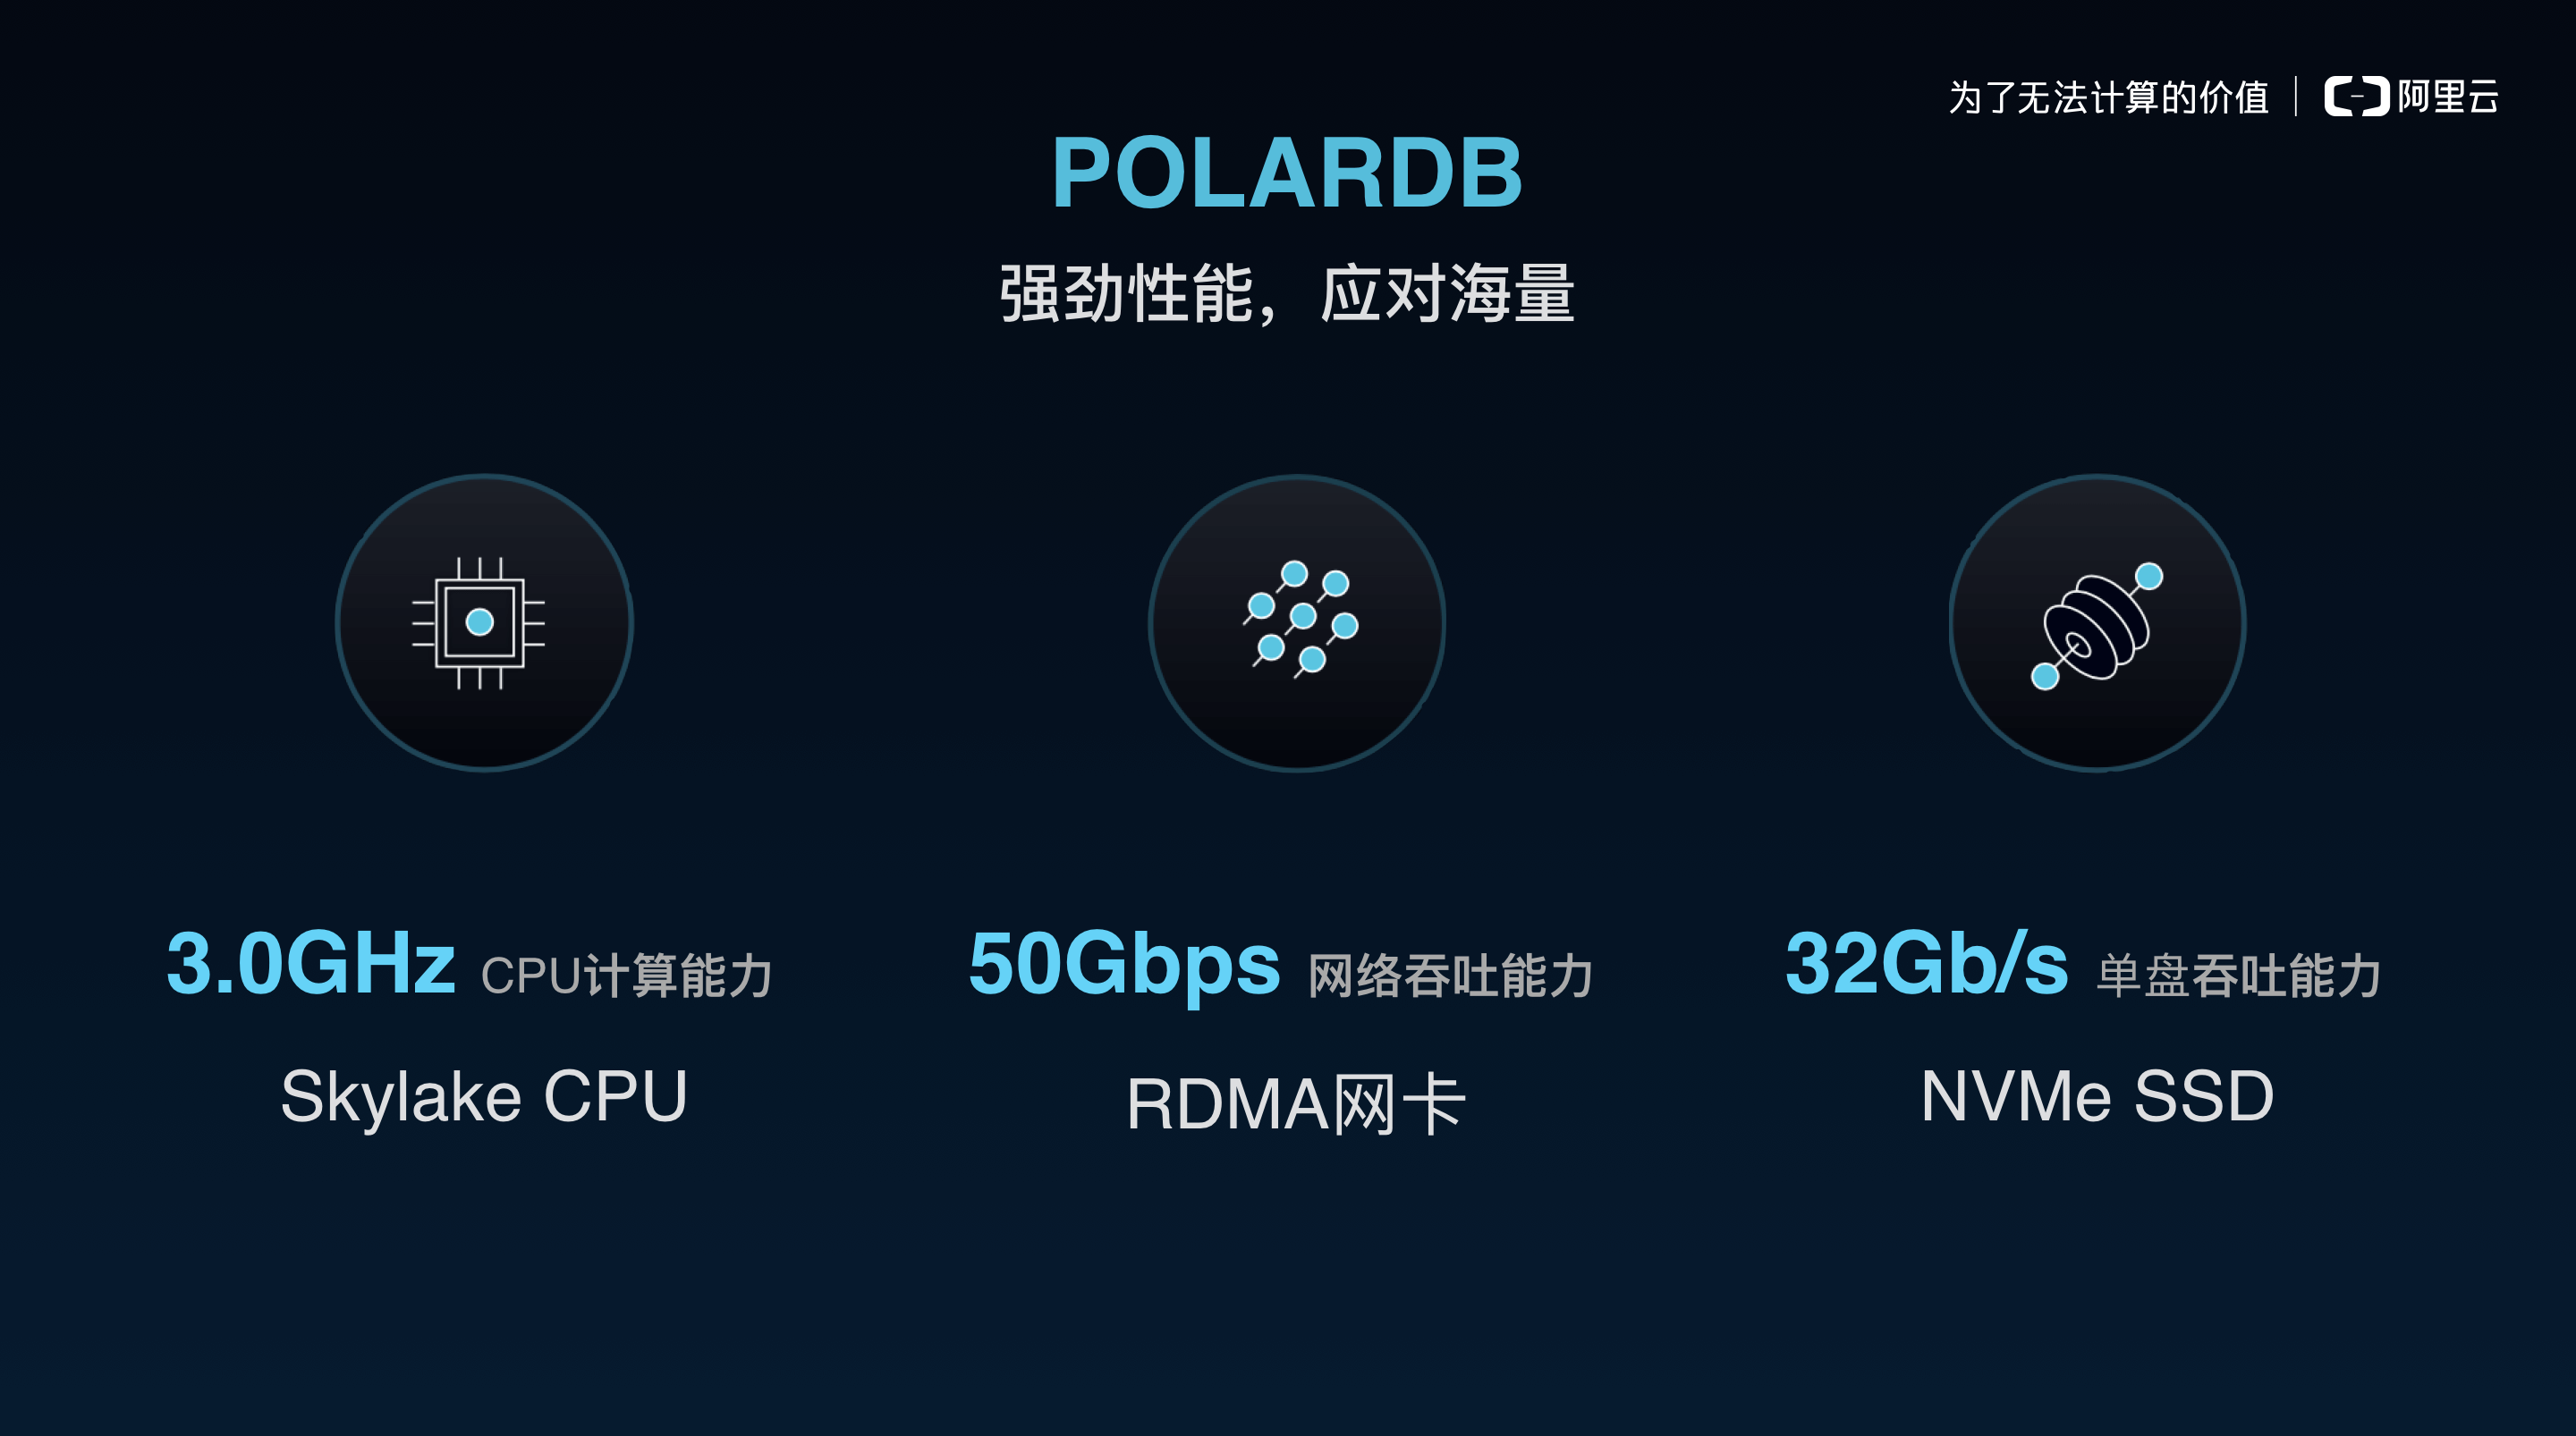 POLARDB采用了领先的硬件技术